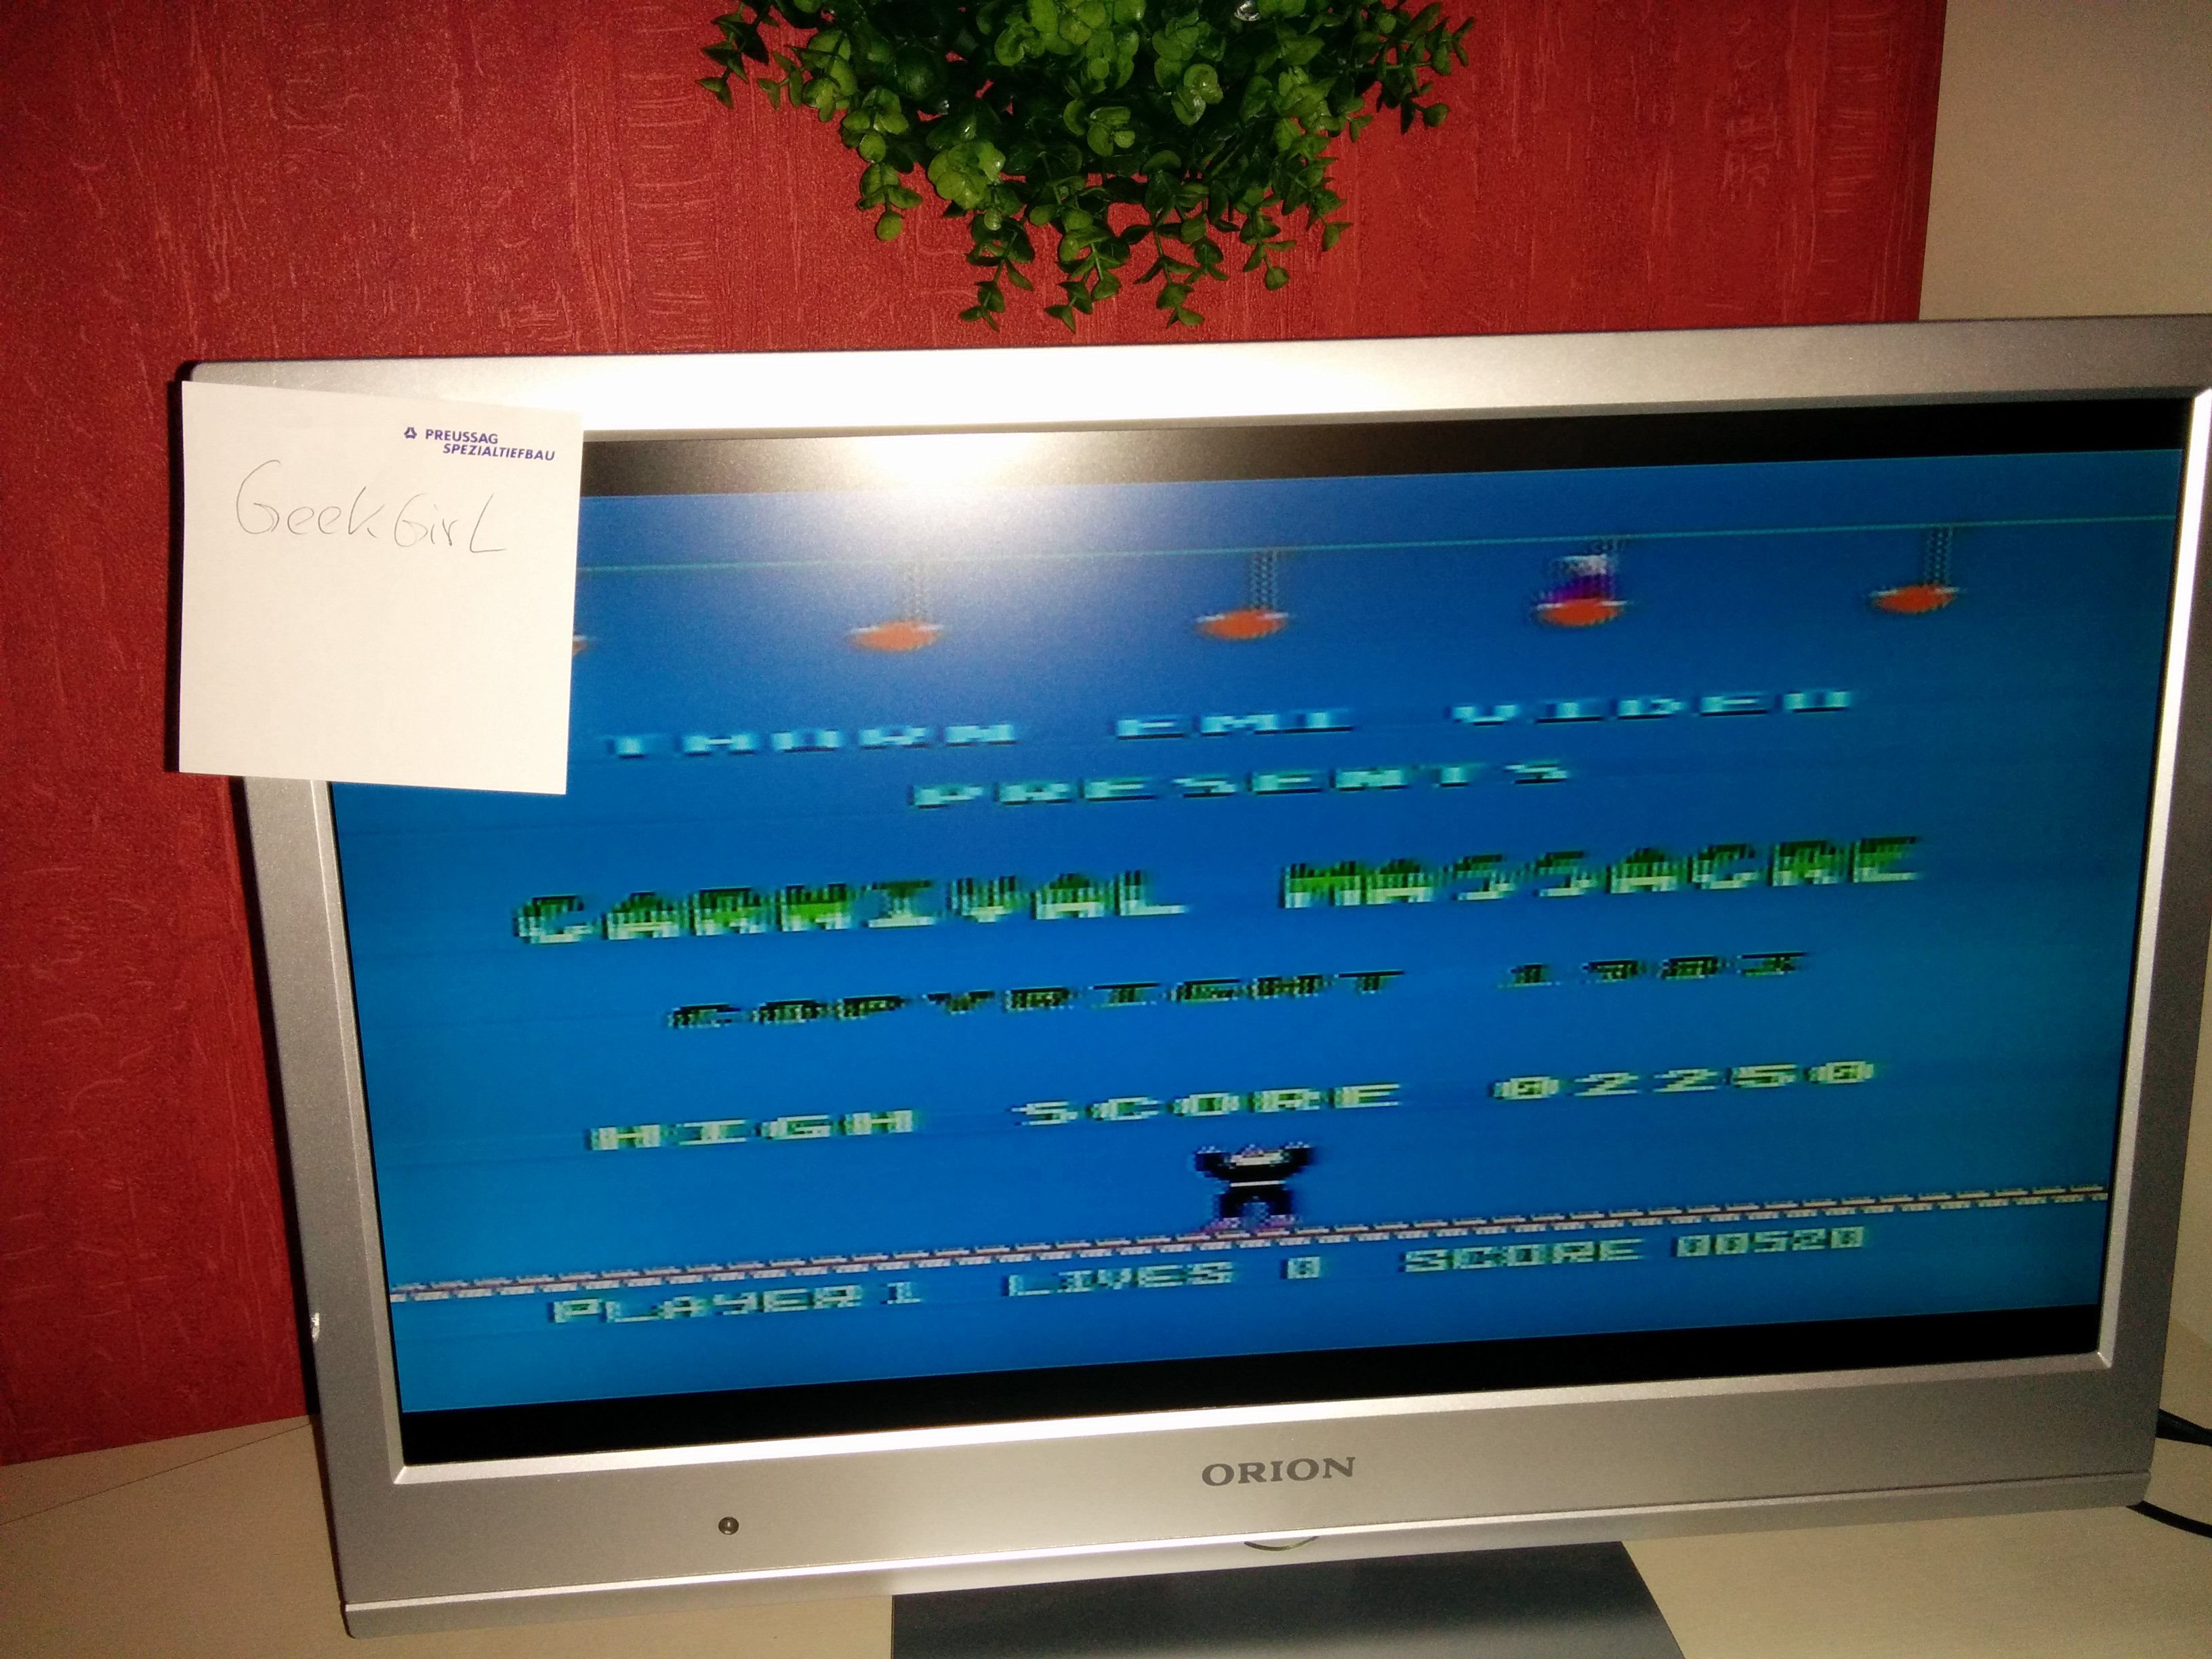 GeekGirl: Carnival Massacre (Atari 400/800/XL/XE) 520 points on 2015-11-02 10:41:29